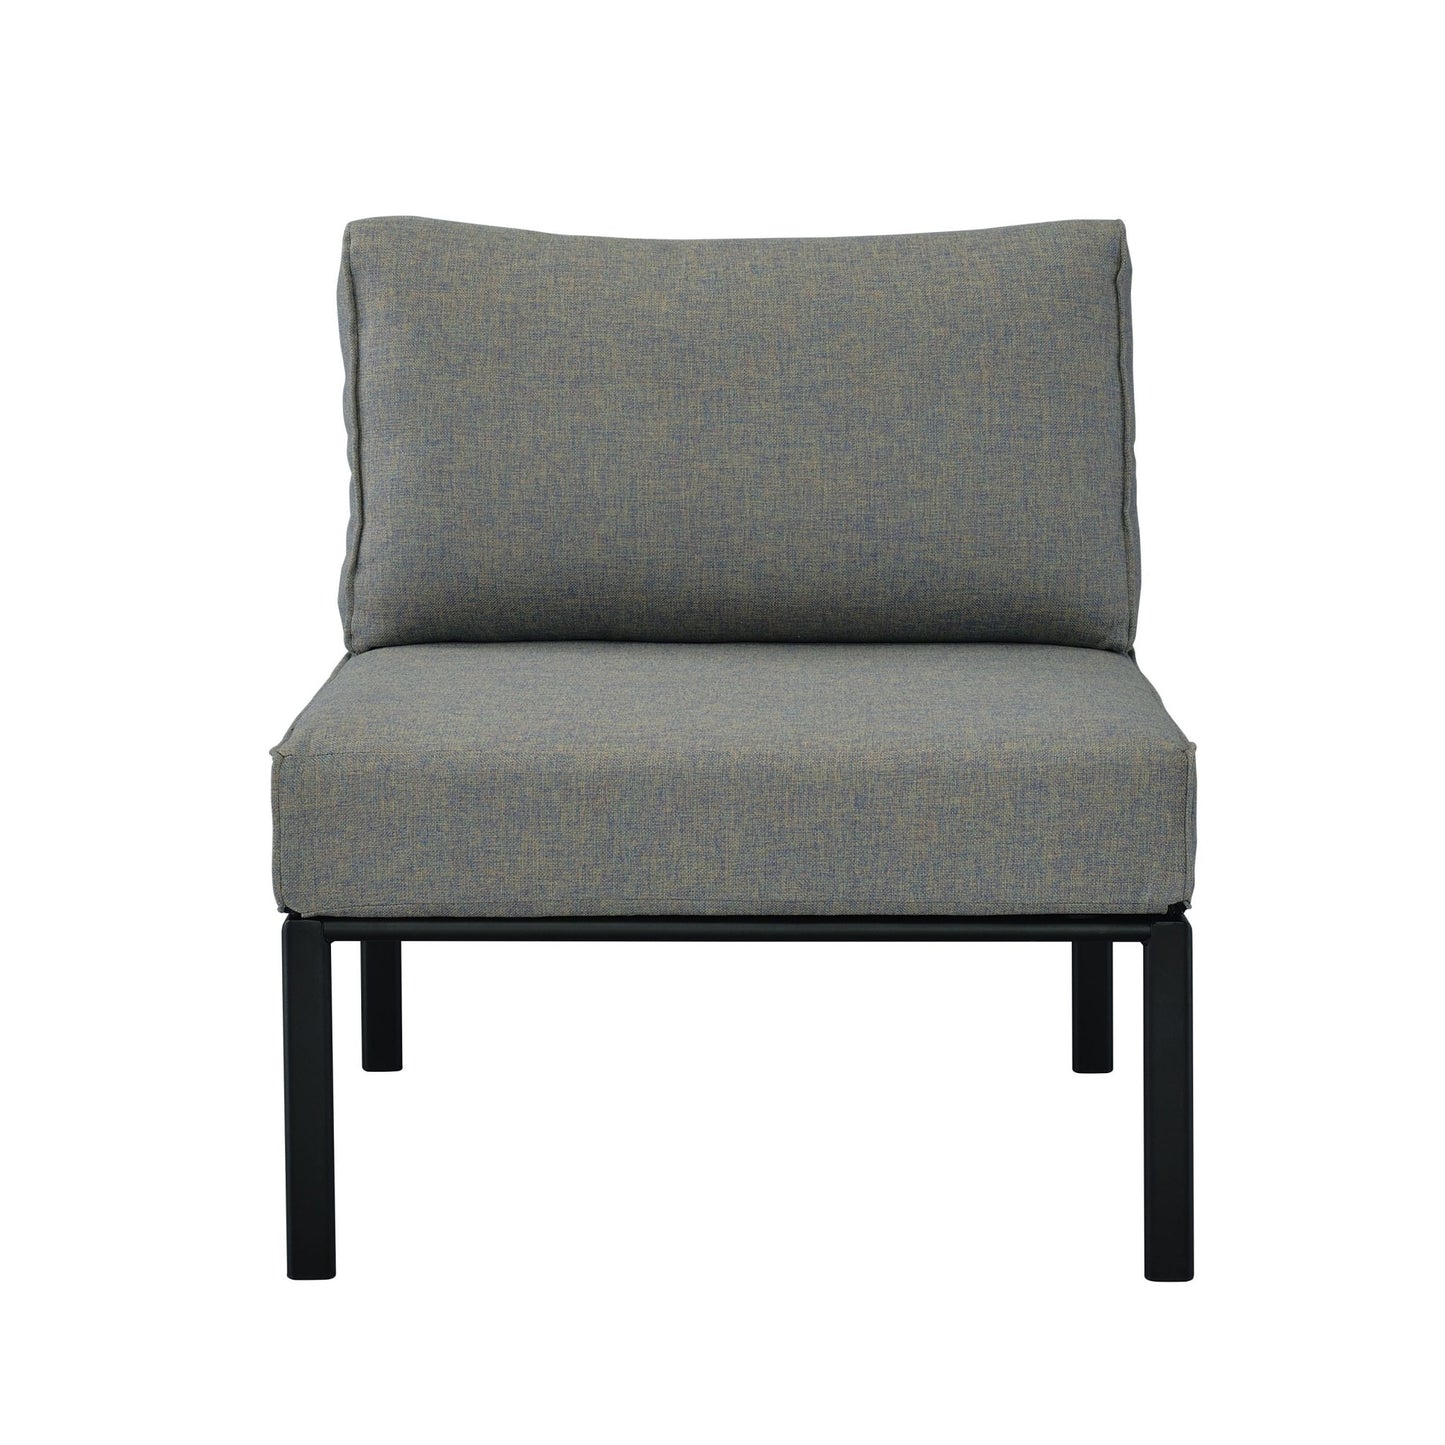 ACME Rajni Patio-Armless Chair, Gray Fabric & Black Finish OT01762 - Groovy Boardz